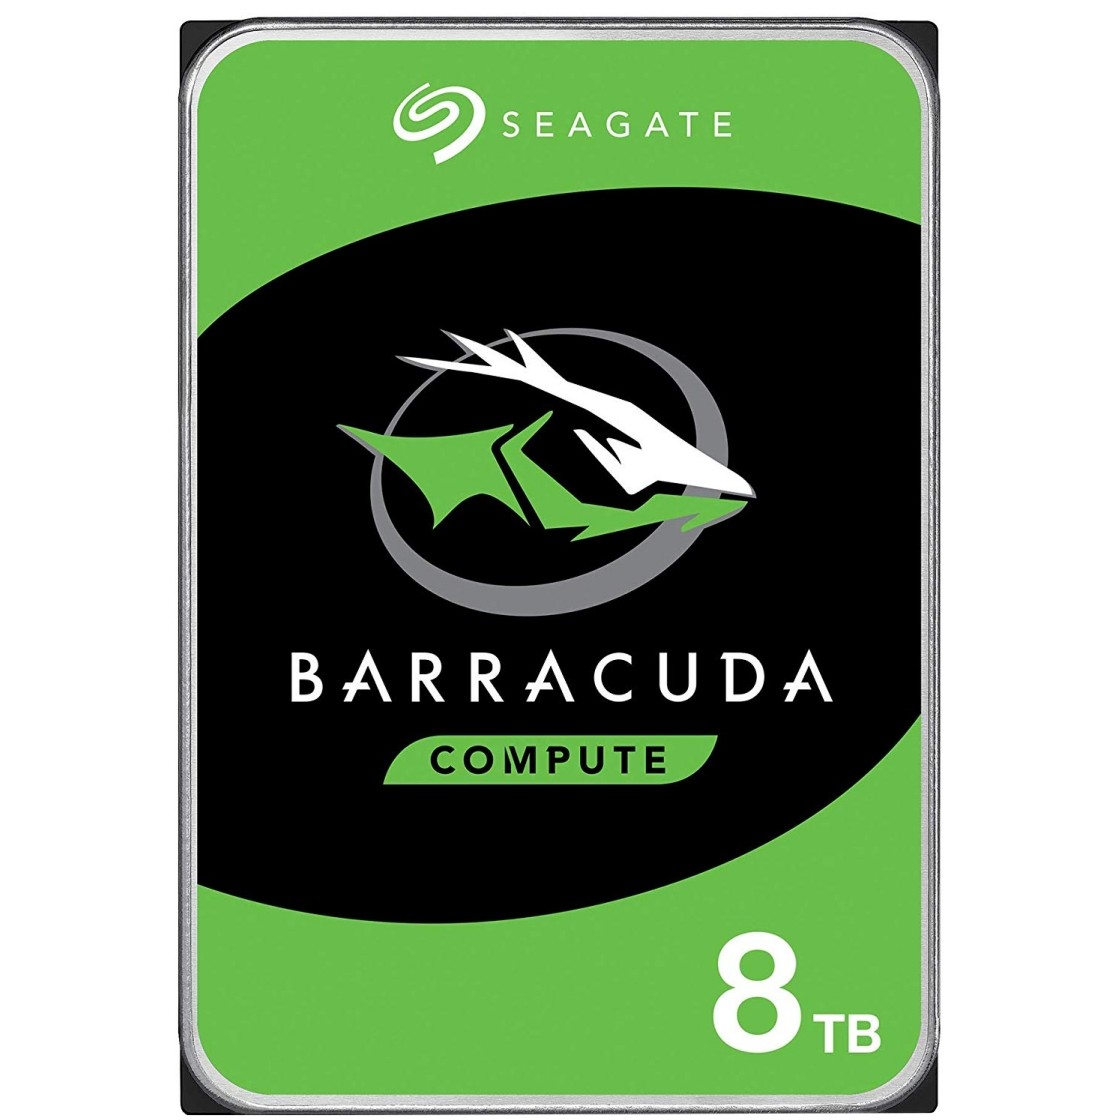 Seagate Barracuda ST8000DM004 internal hard drive - ST8000DM004